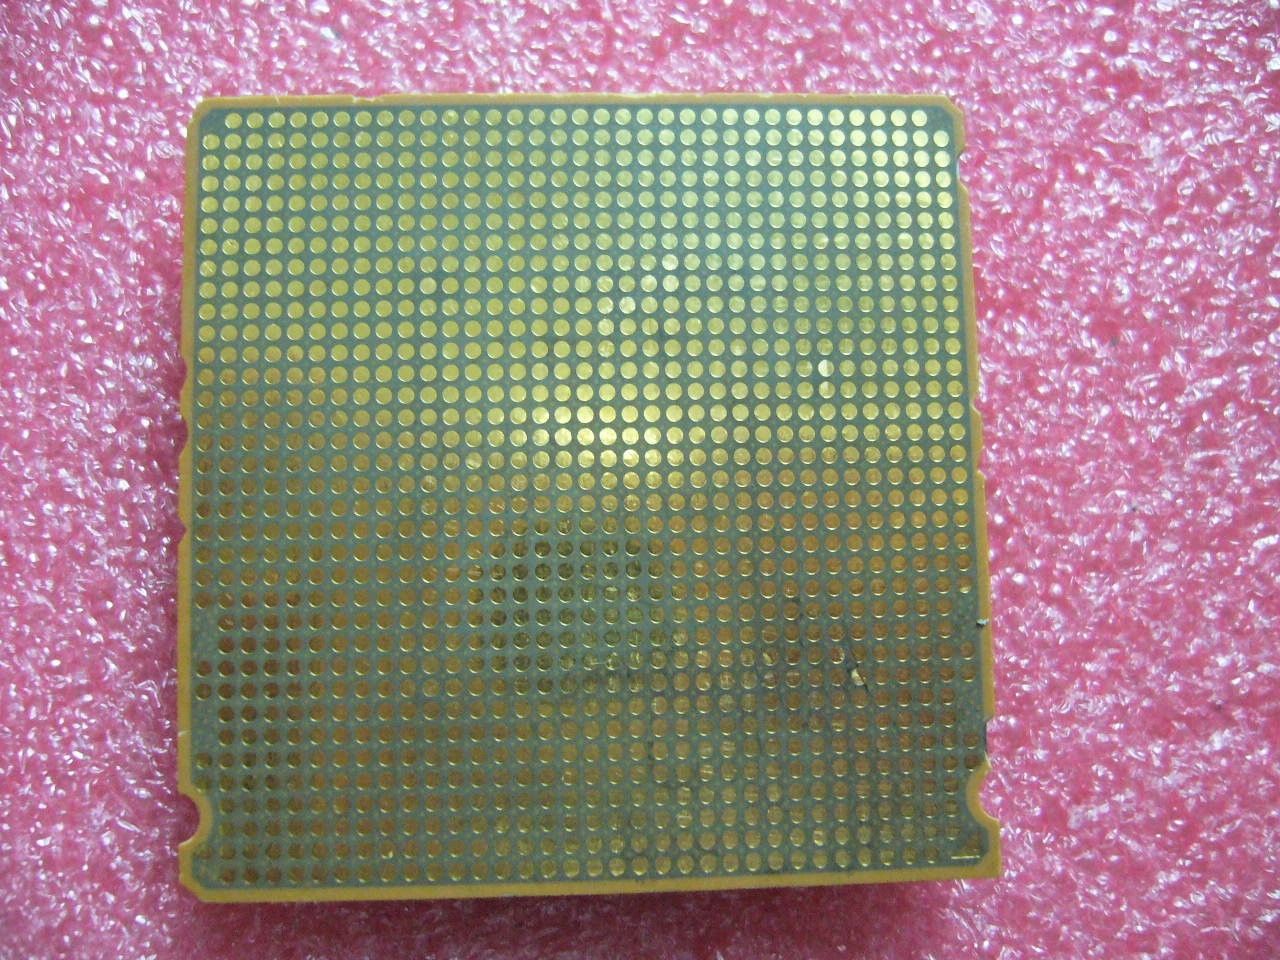 QTY 1x AMD Opteron 4267 2.1 GHz EHE Eight Core (OS4267FNU8KGU) CPU Socket C32 - Click Image to Close